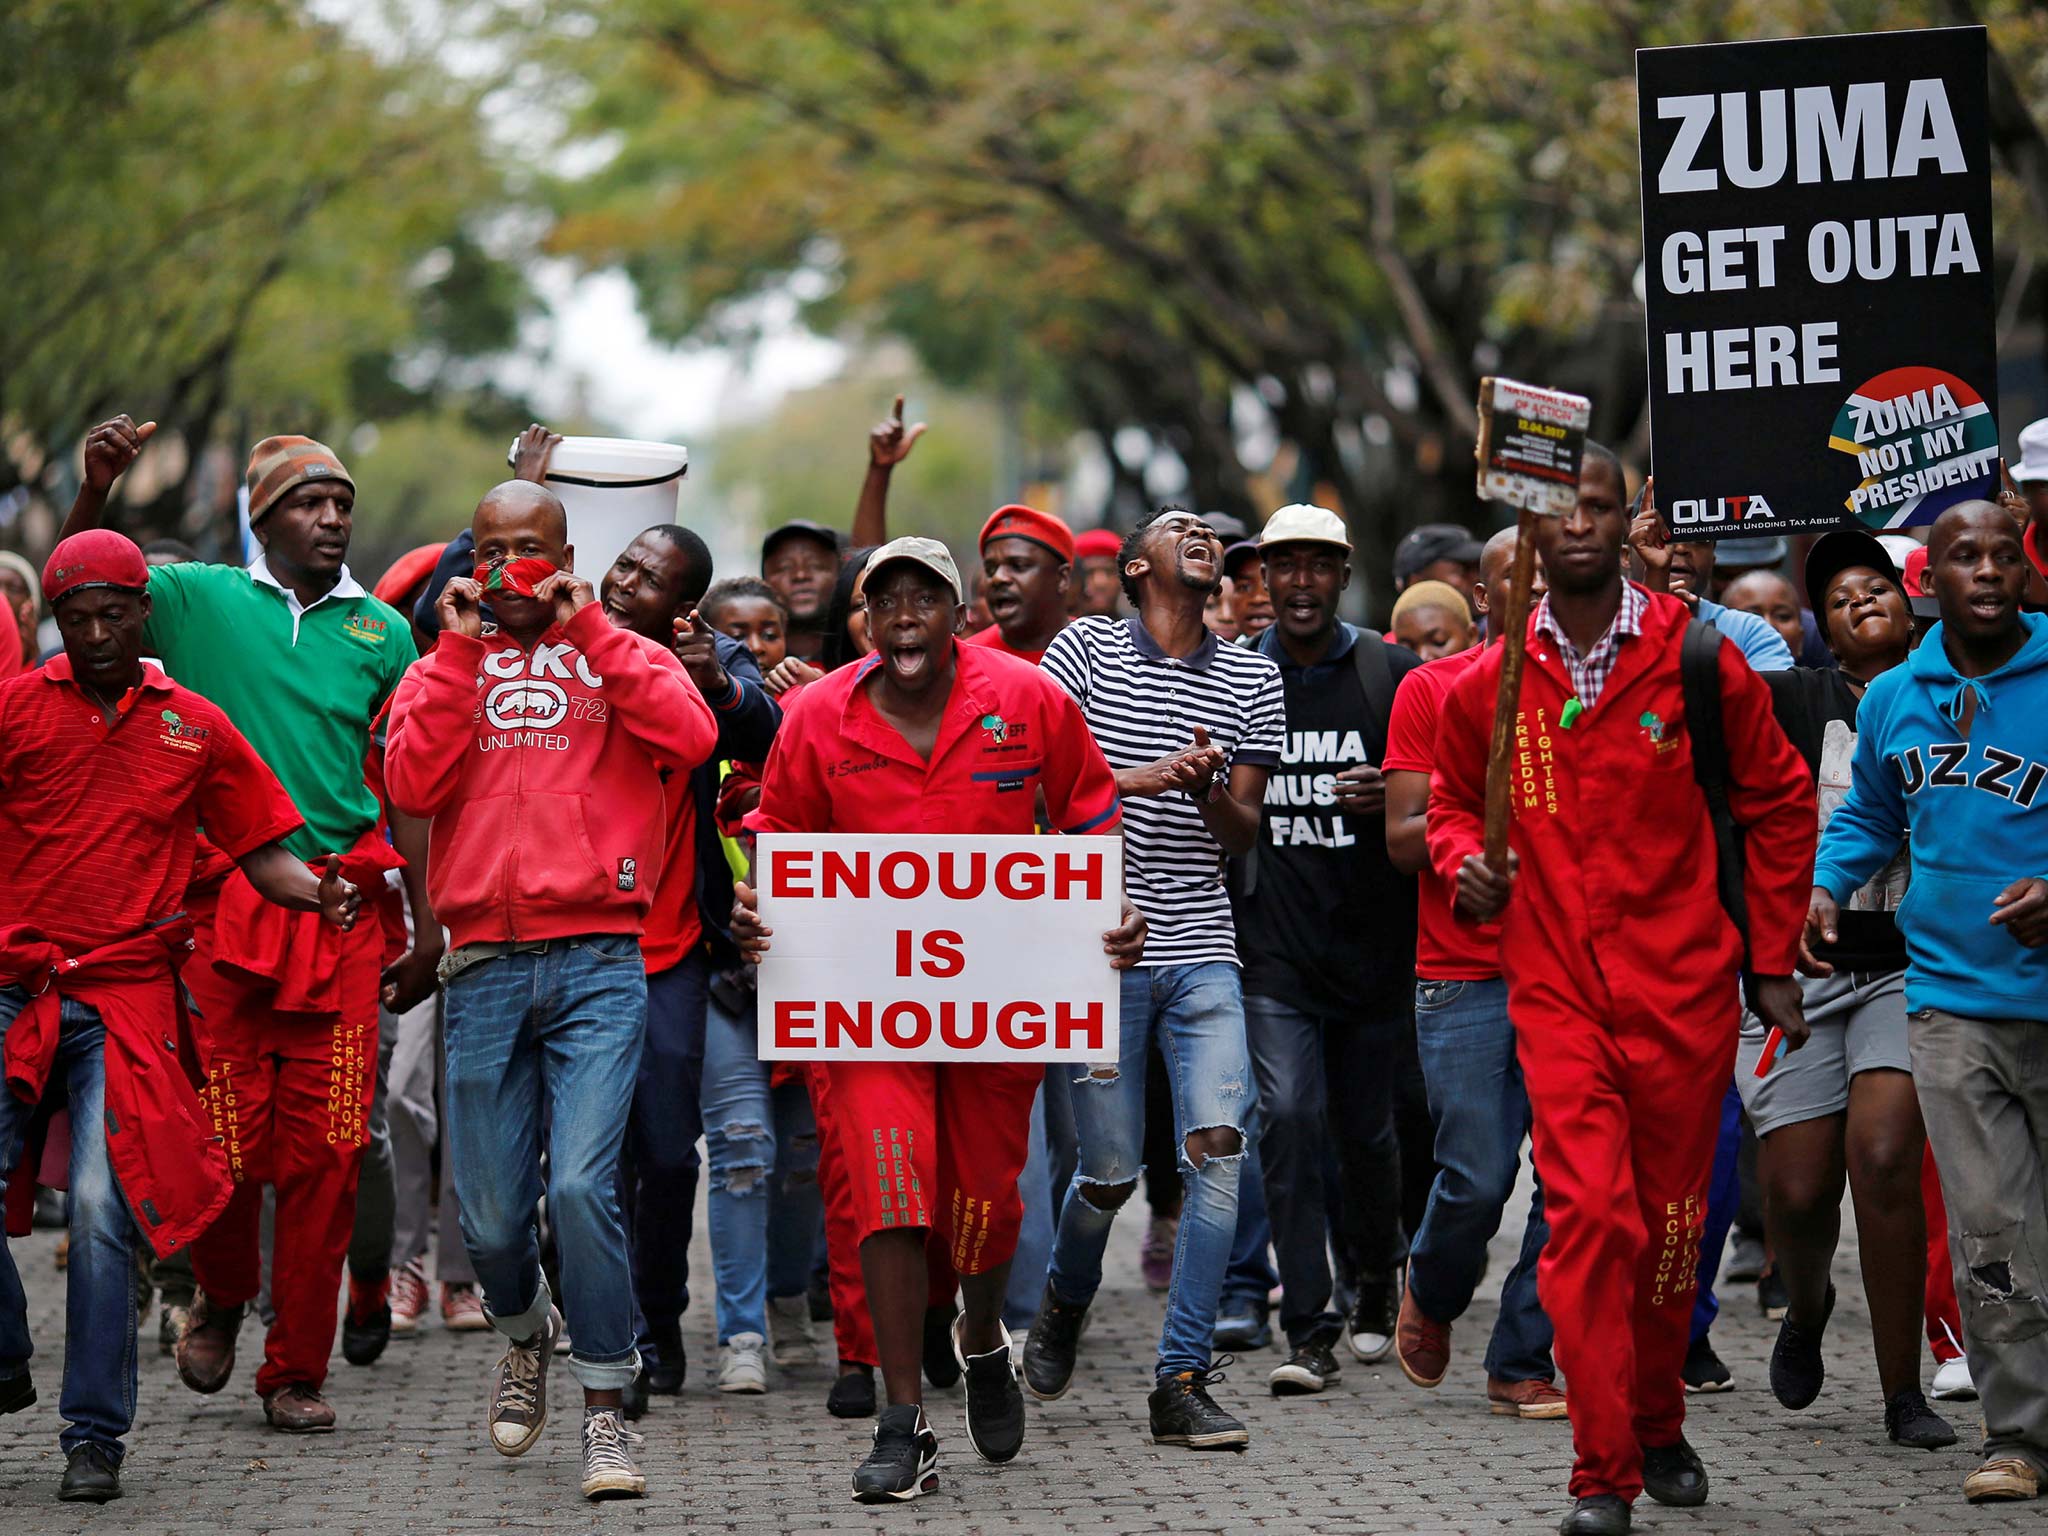 Thousands gathered in Pretoria to demand President Zuma steps down